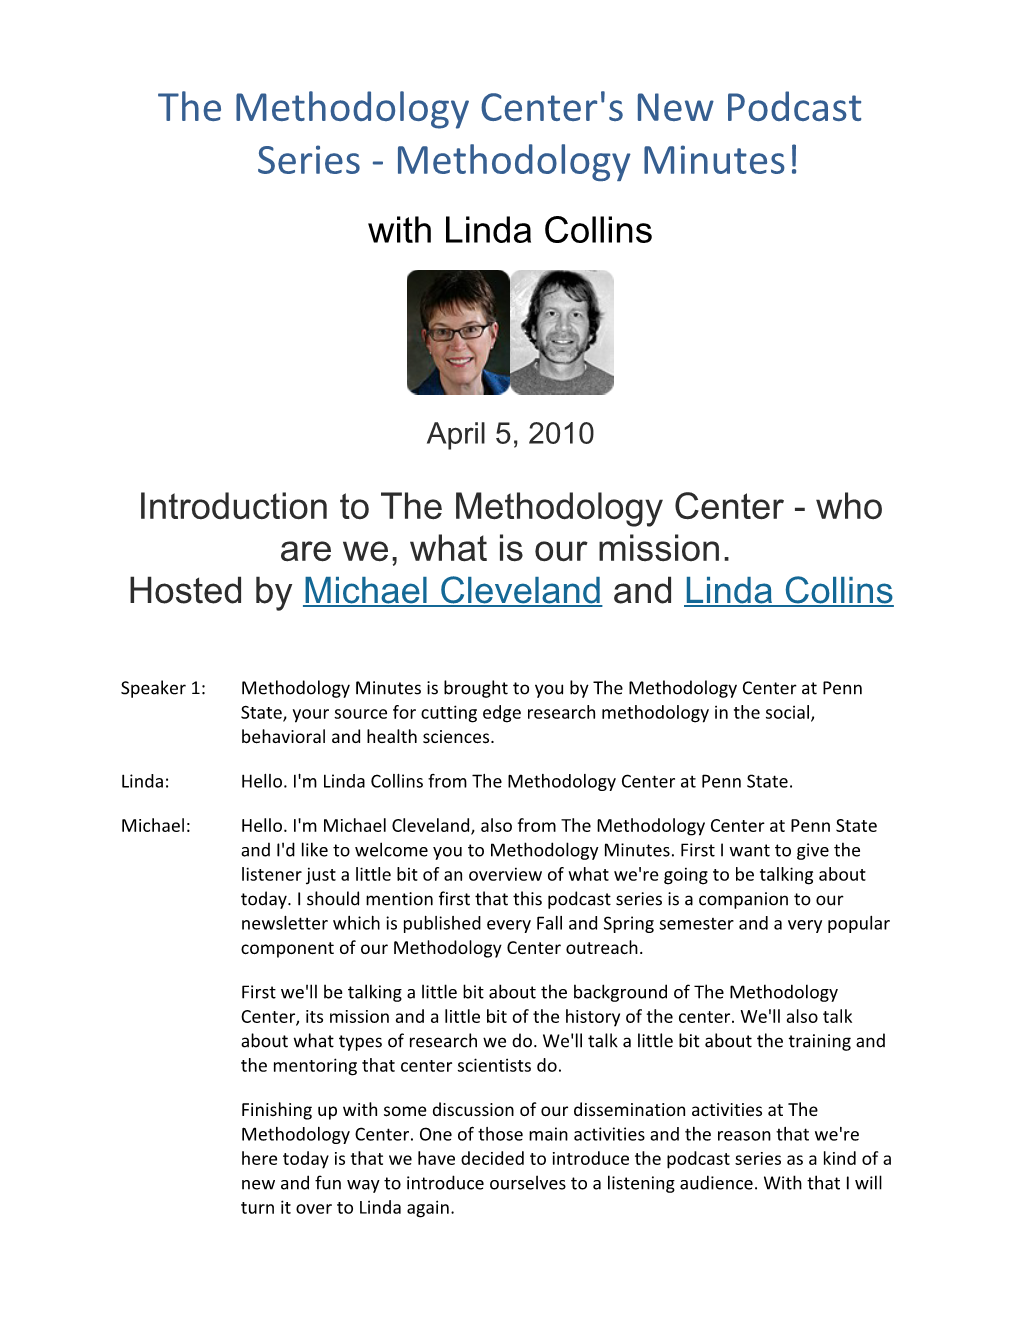 The Methodology Center's New Podcast Series - Methodology Minutes!